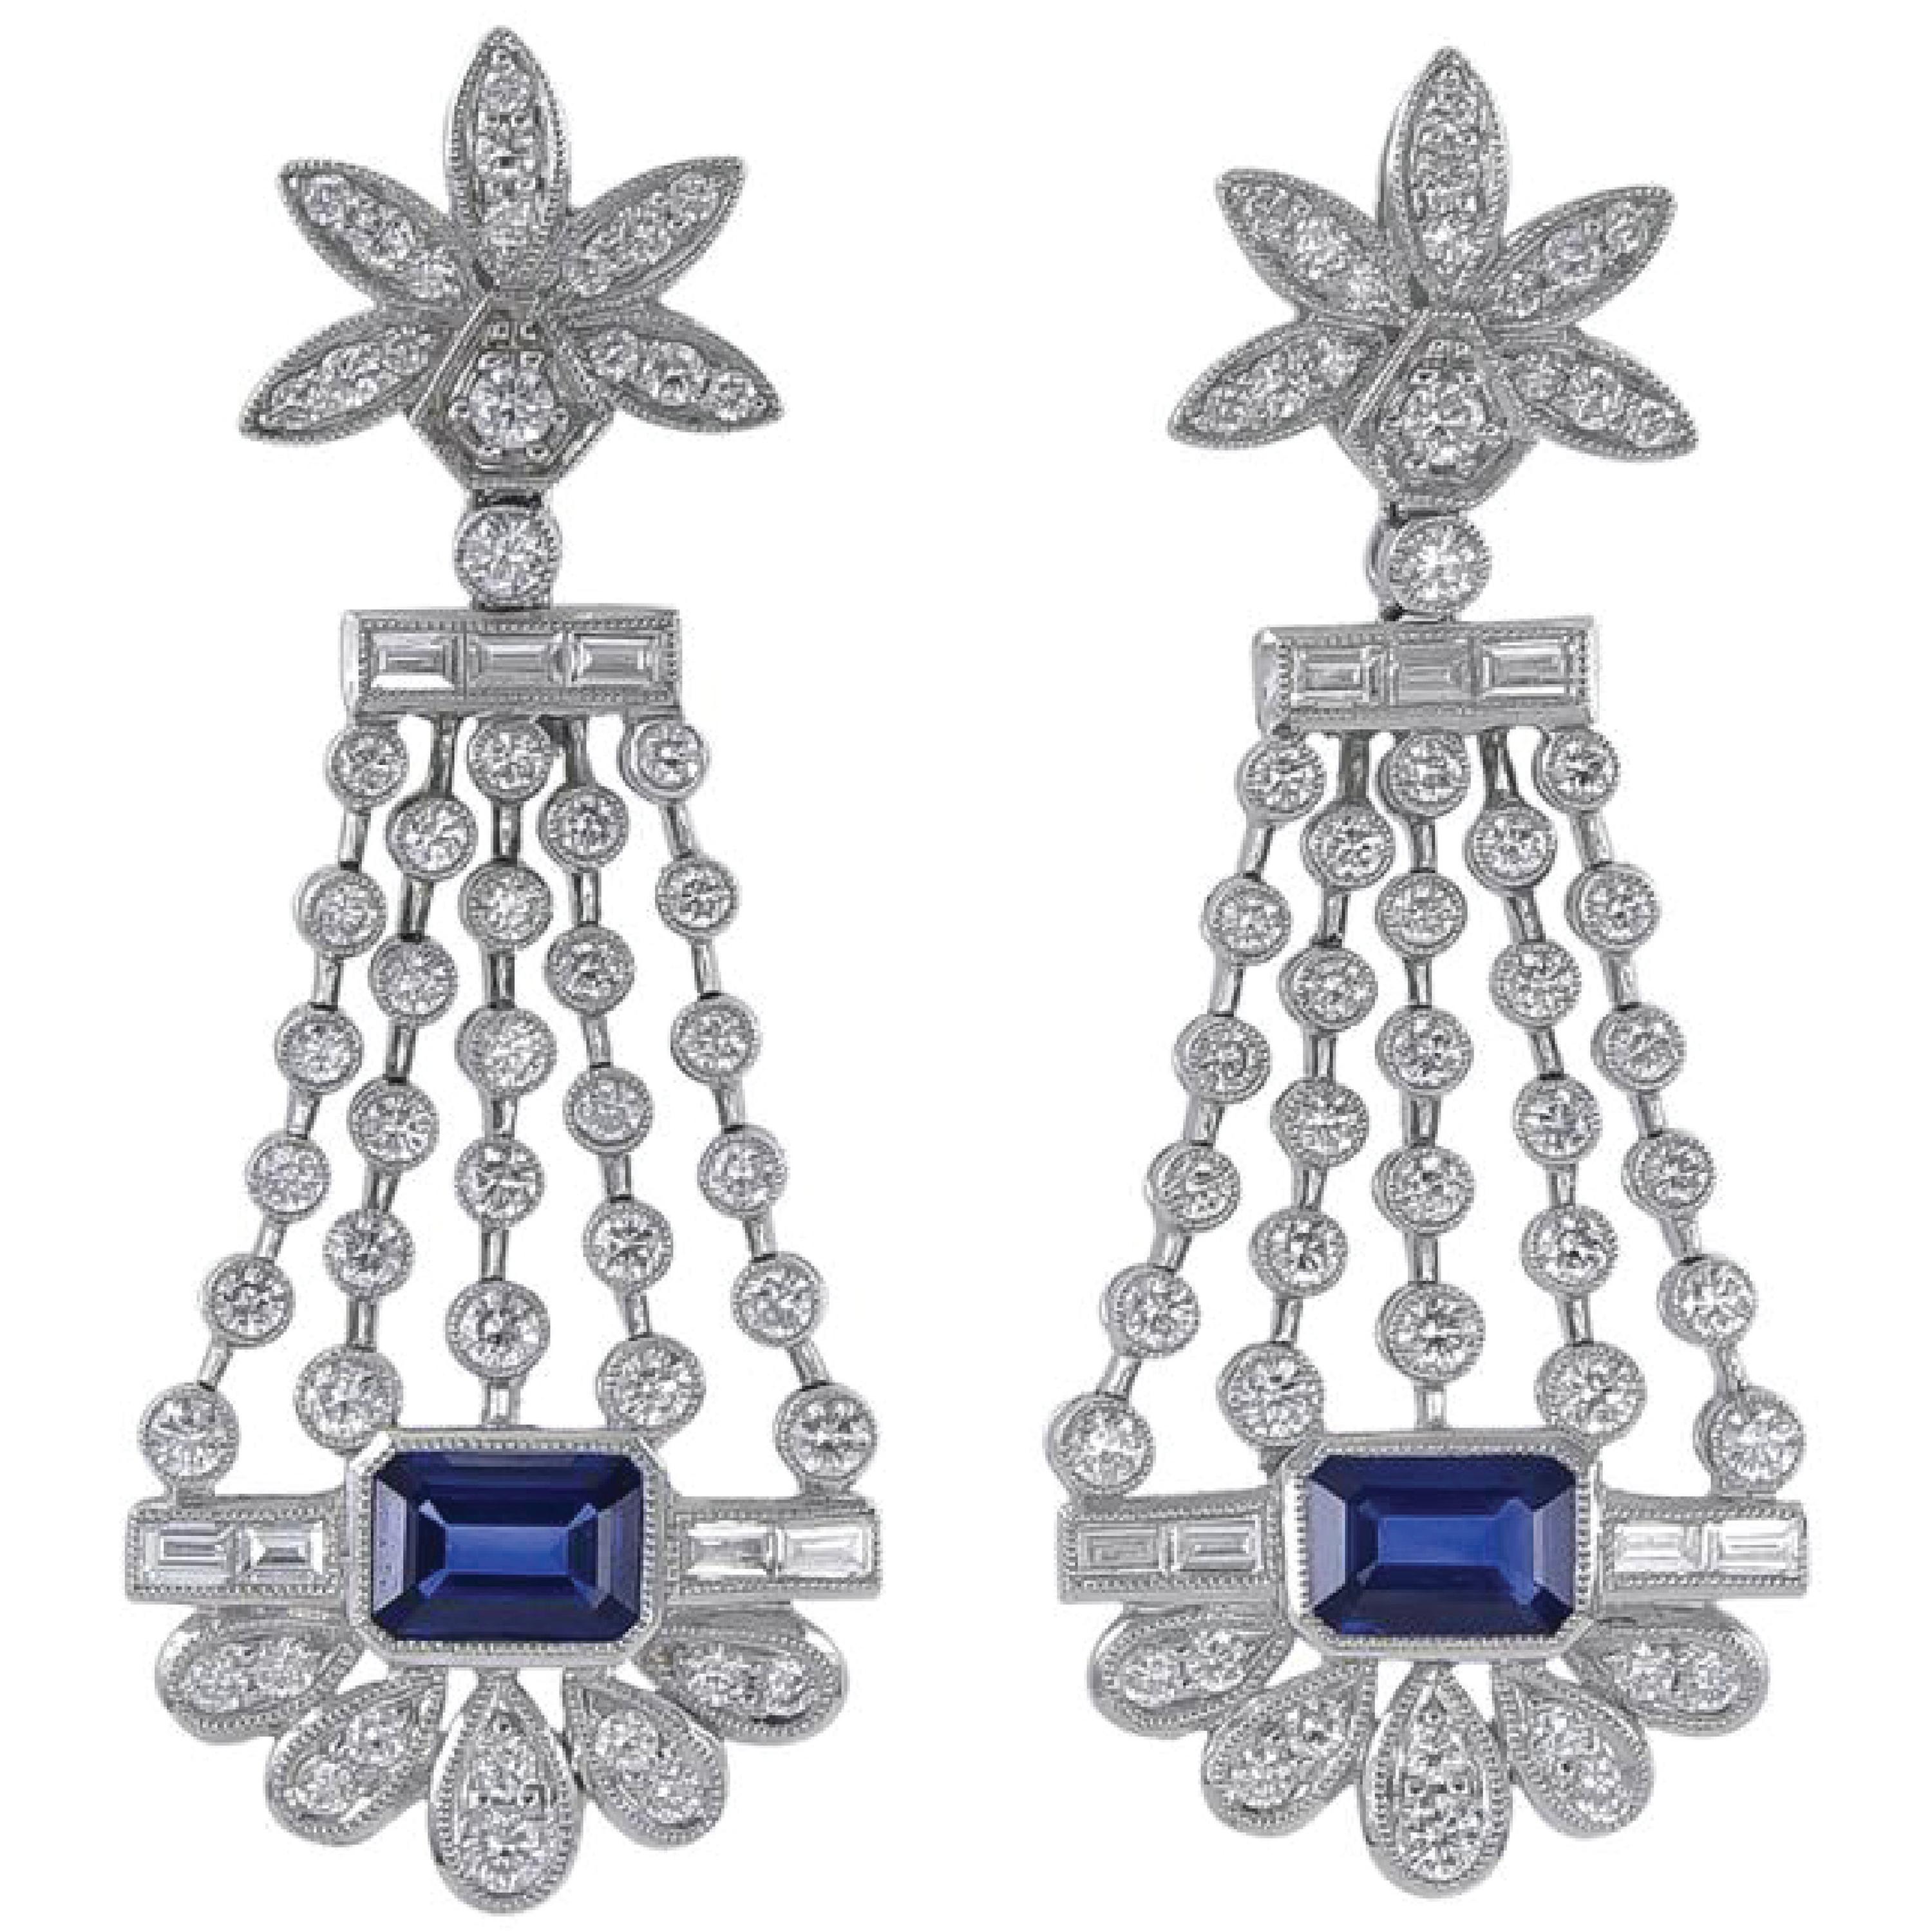 Sophia D. Blue Sapphire and Diamond Earrings Set in Platinum For Sale